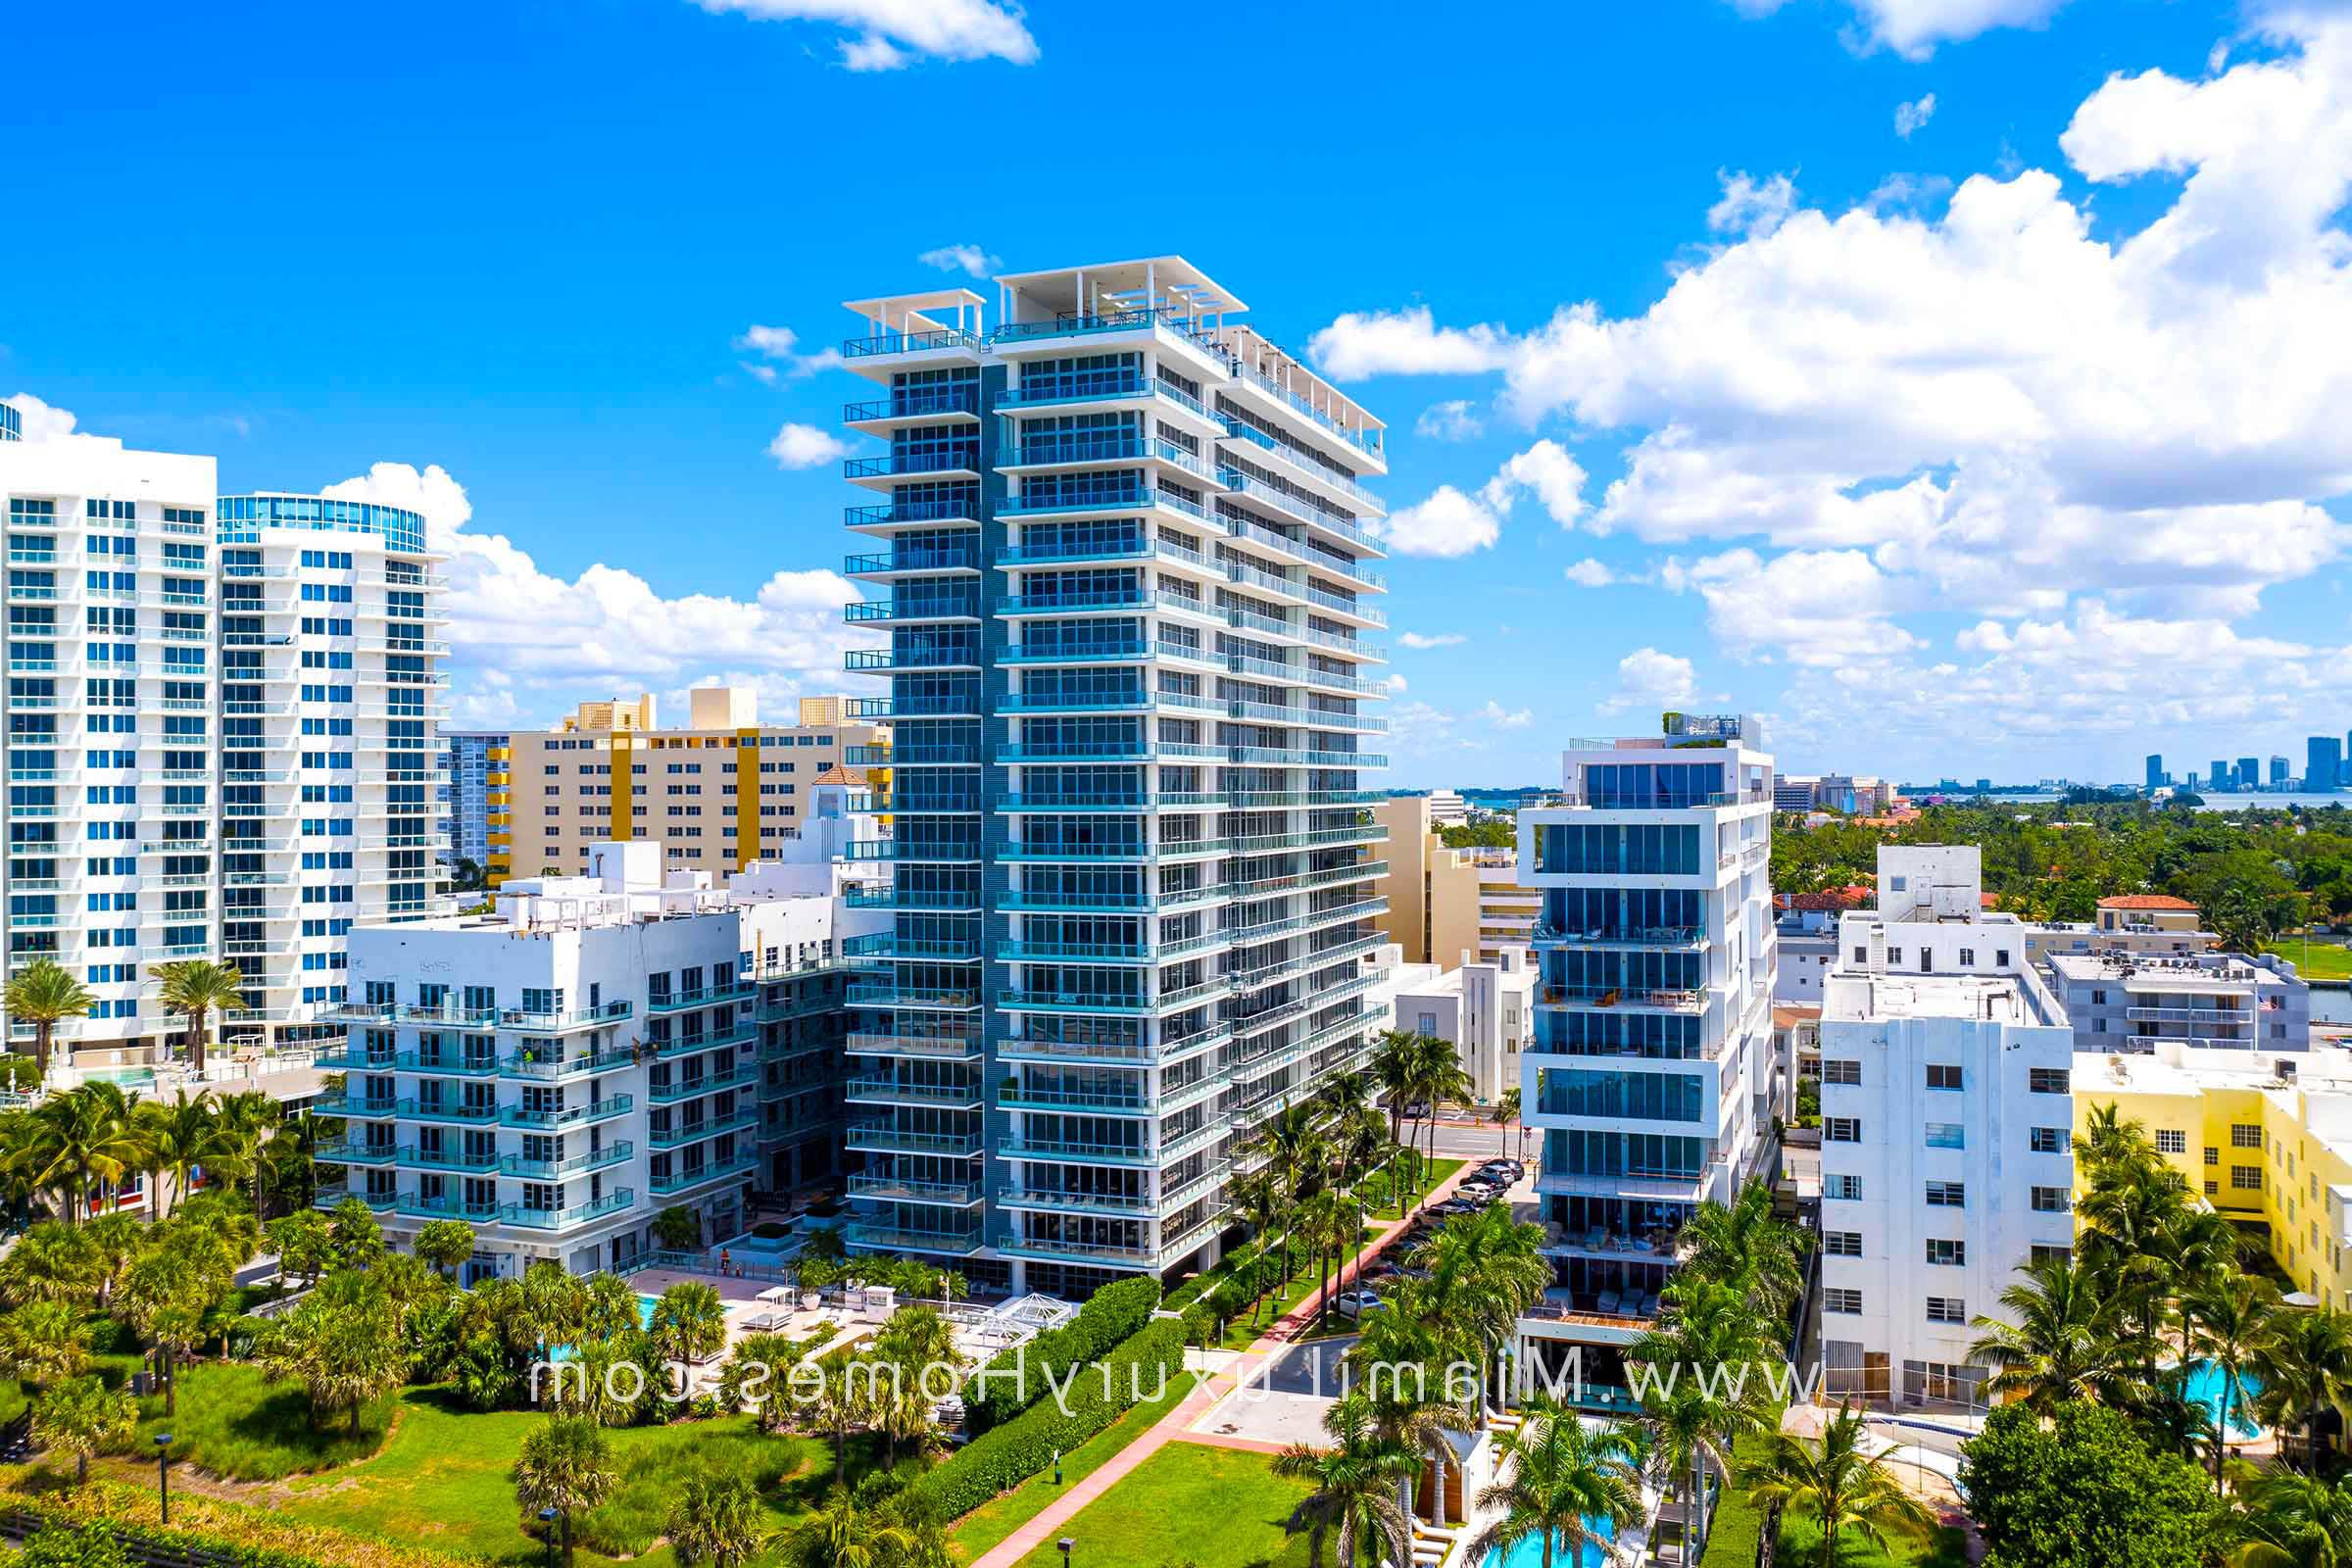 Caribbean Condo Building Miami